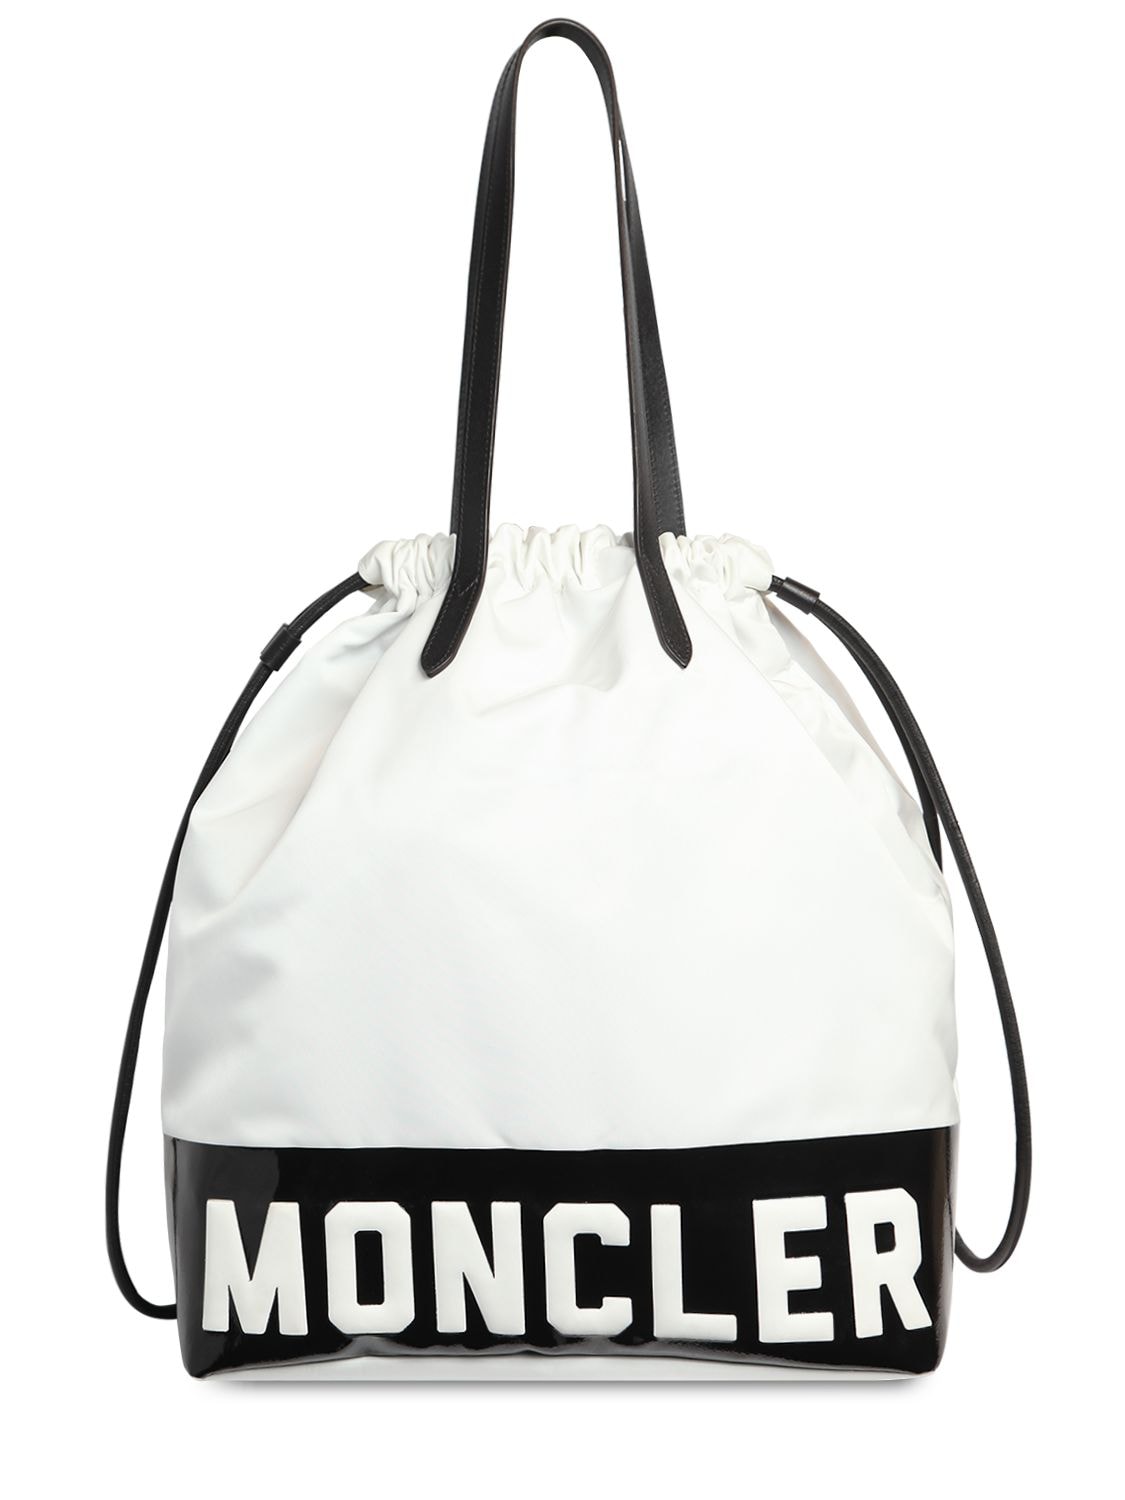 moncler shopping bag